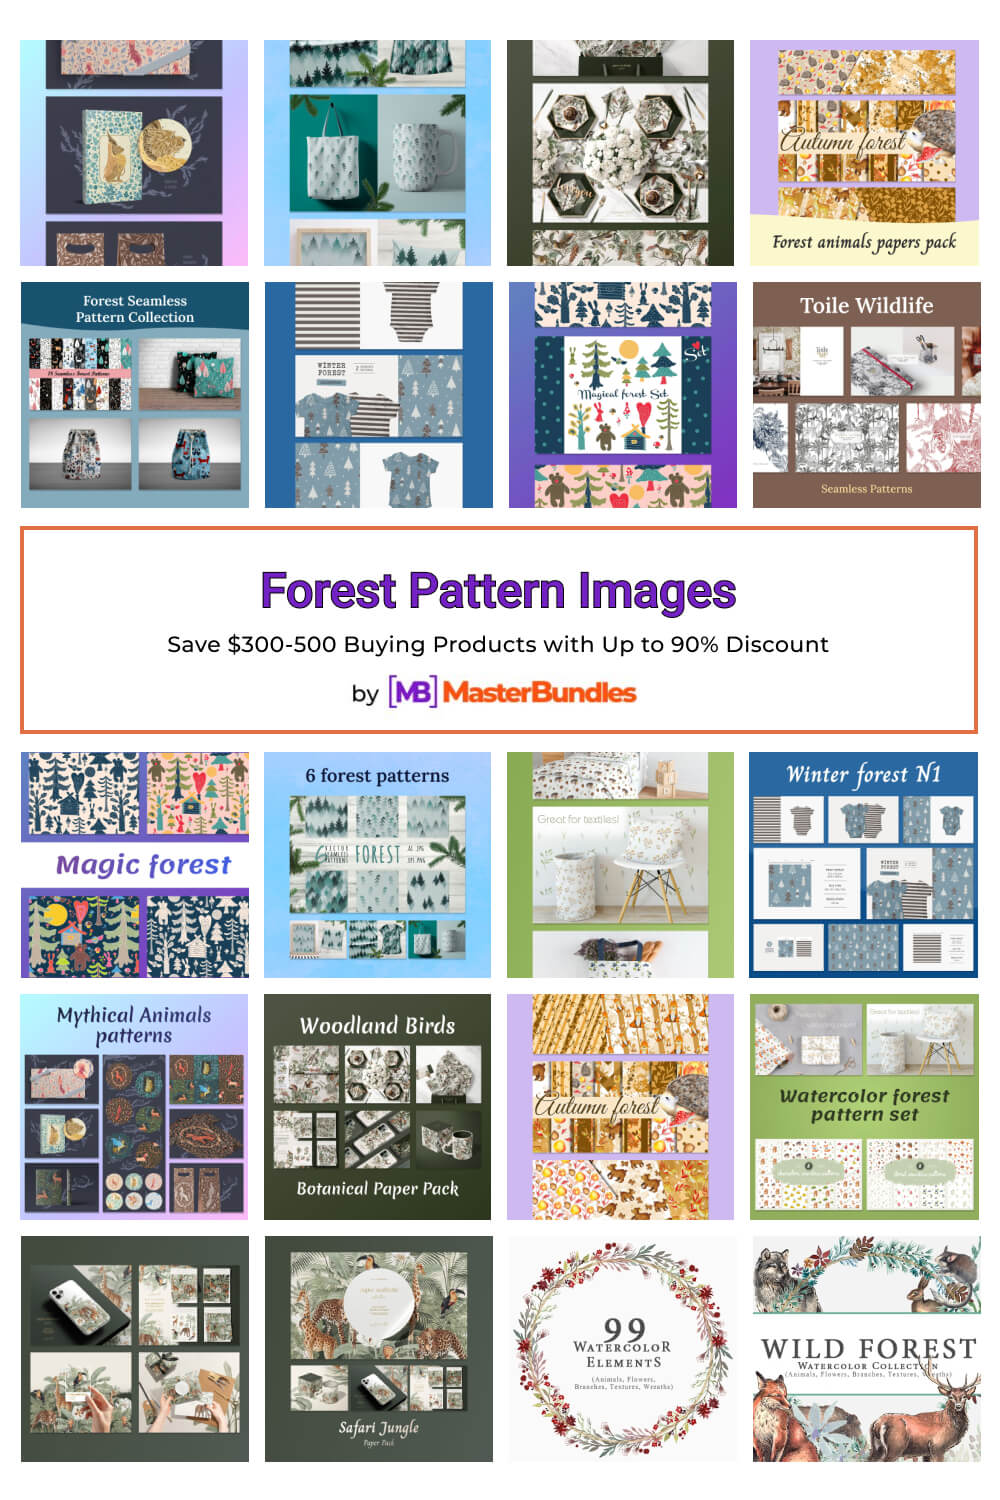 forest pattern images pinterest image.